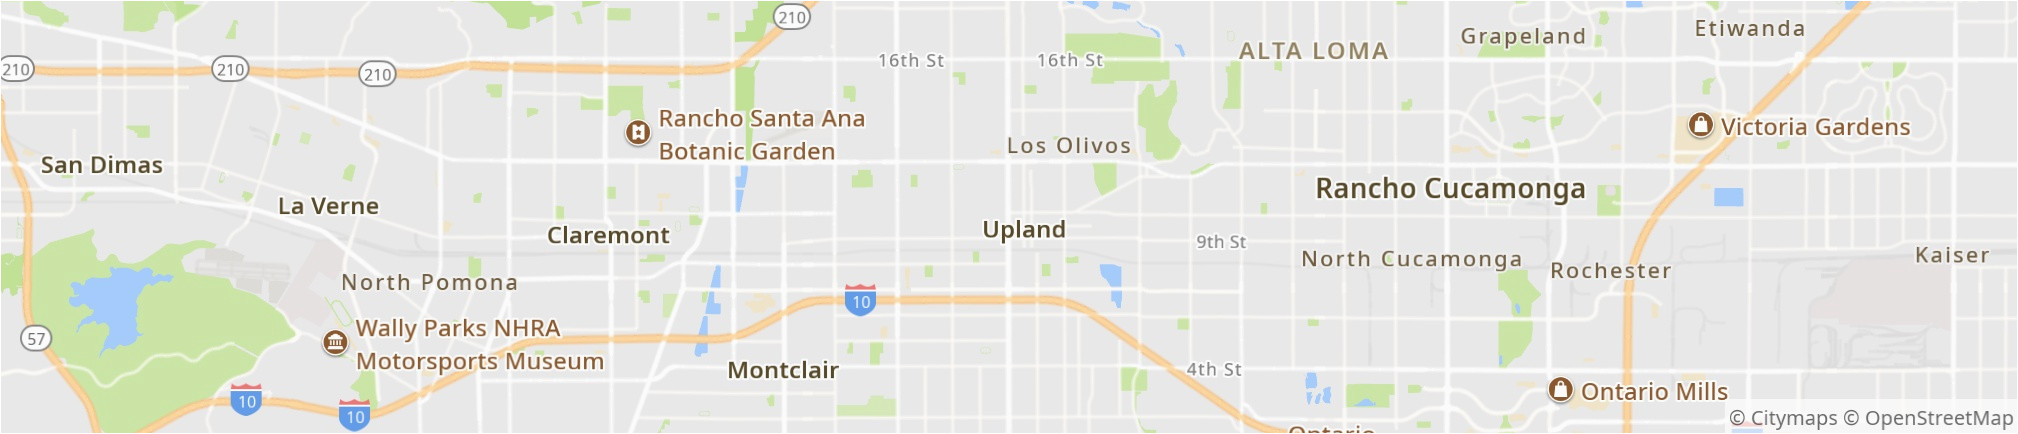 Upland California Map Upland 2019 Best Of Upland Ca tourism Tripadvisor